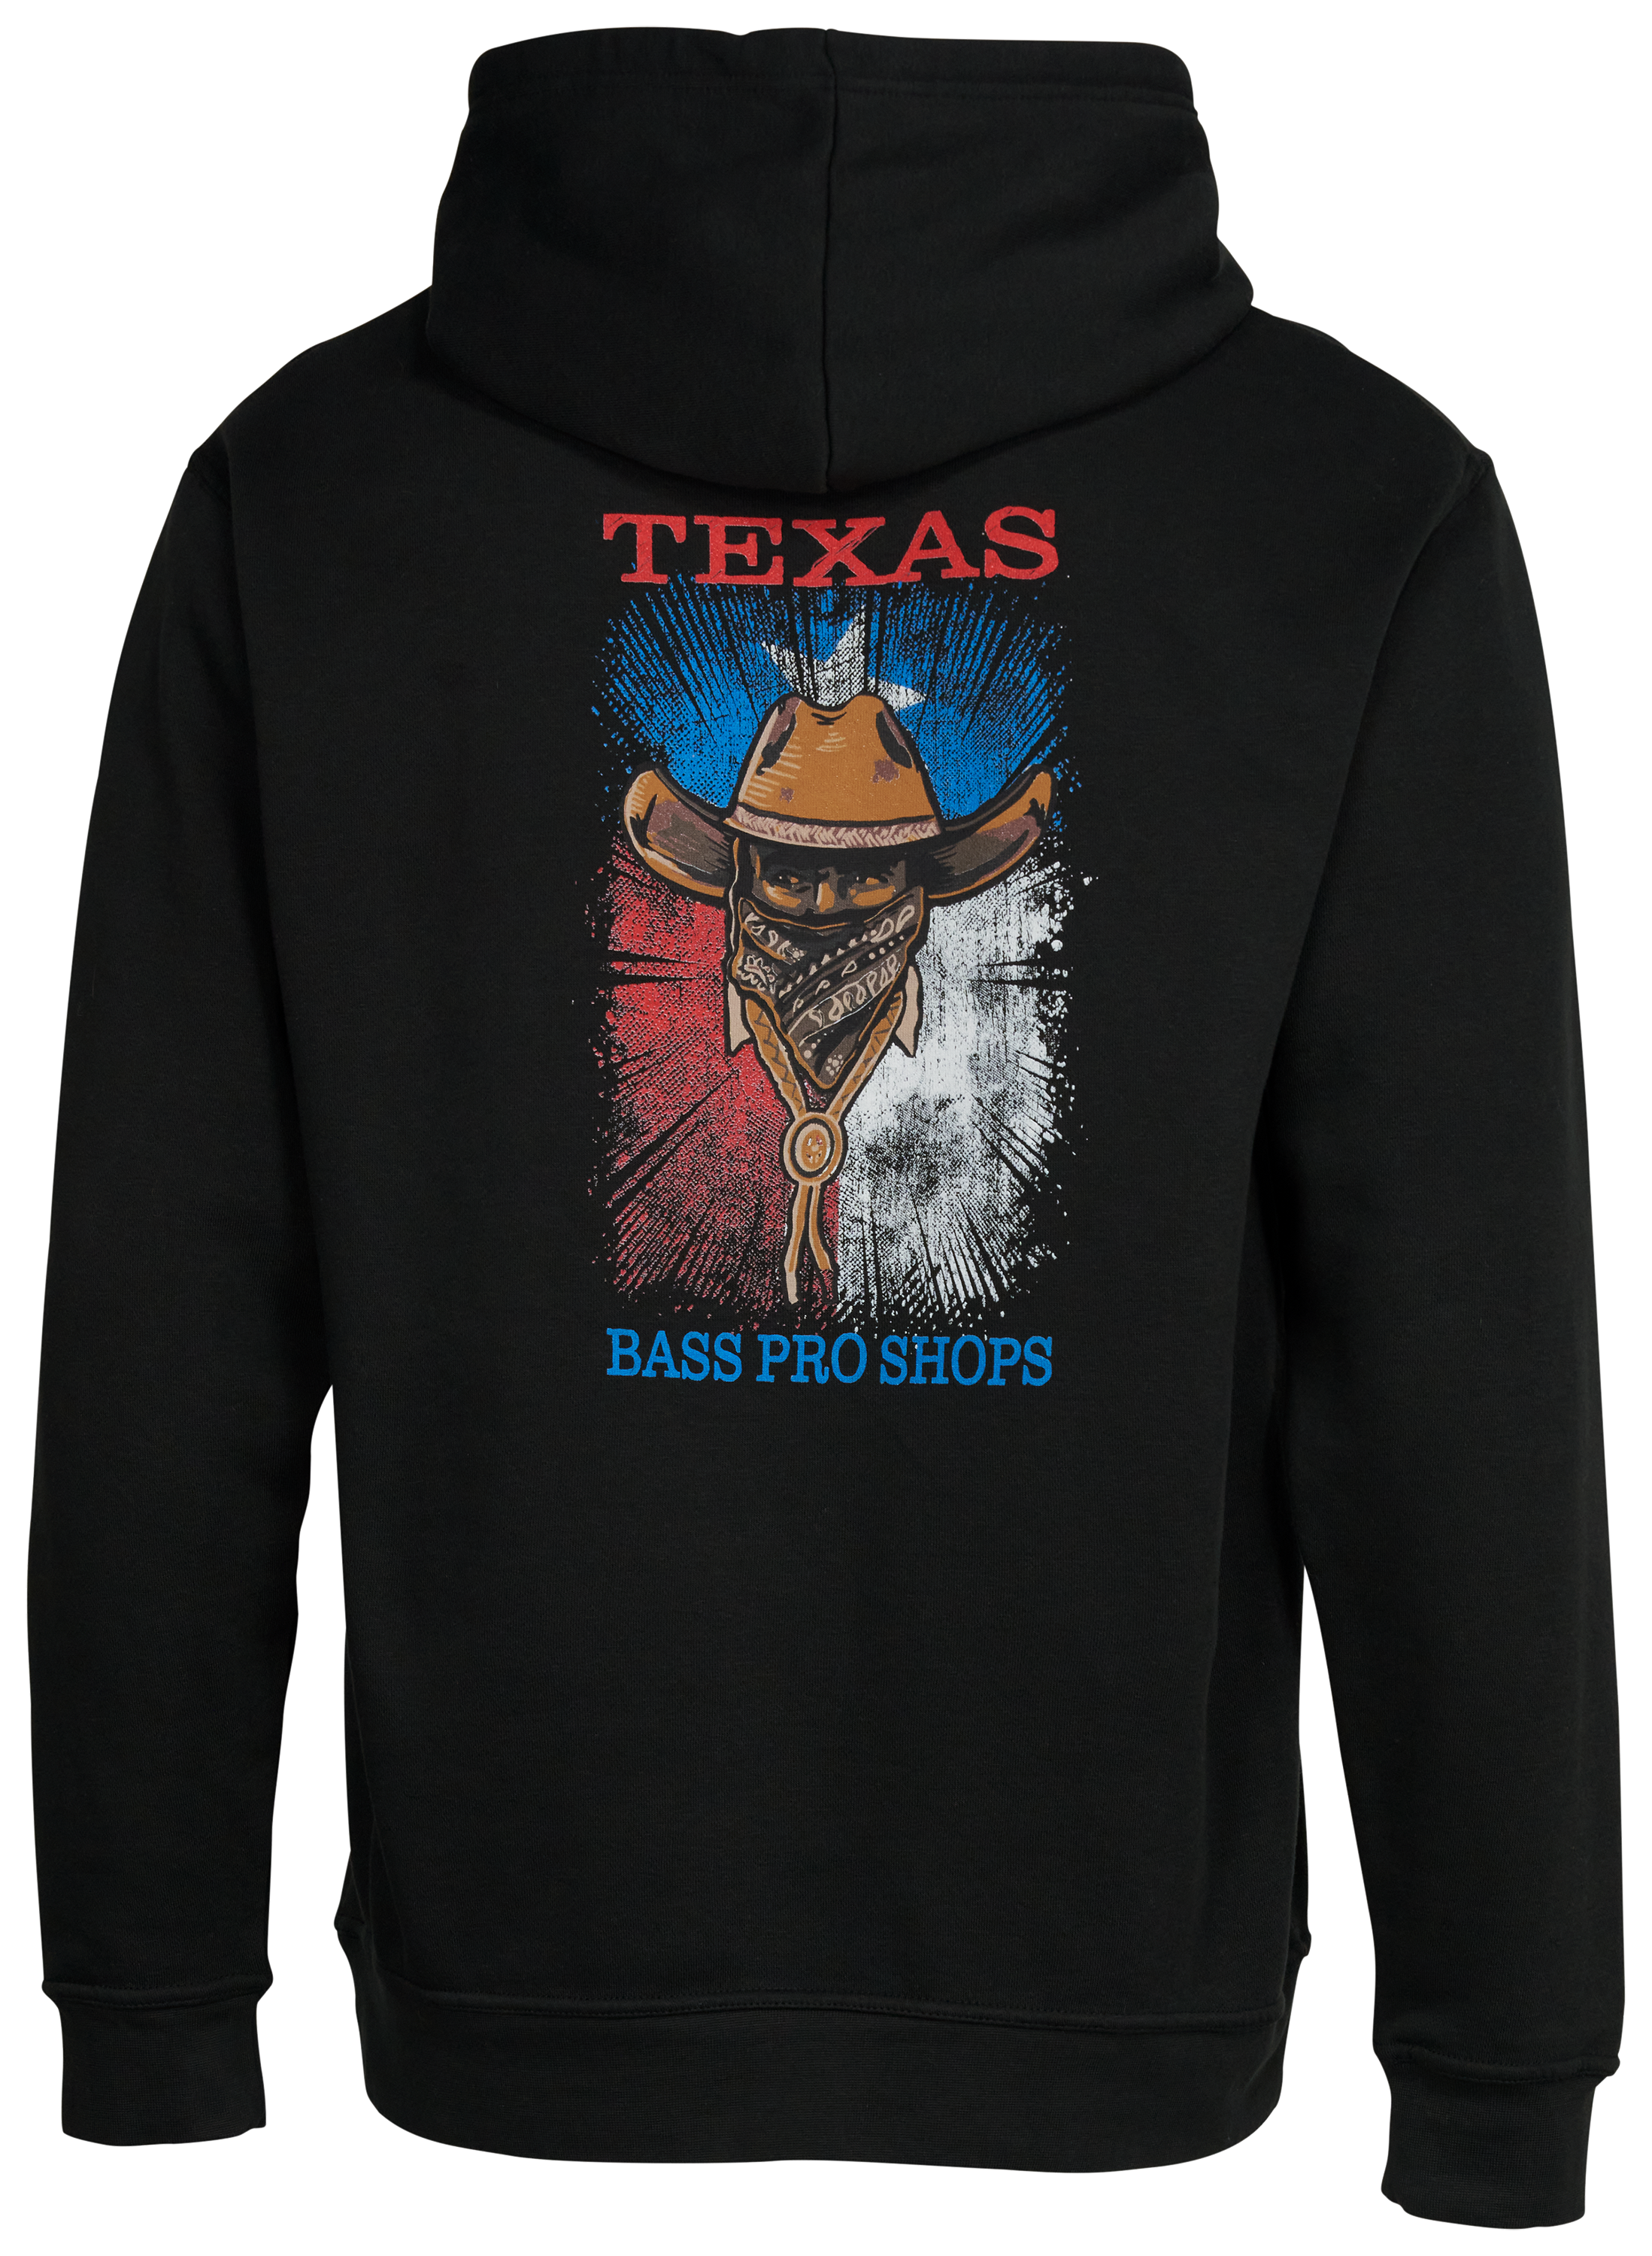 Bass Pro Shops Texas Cowboy Hoodie for Men